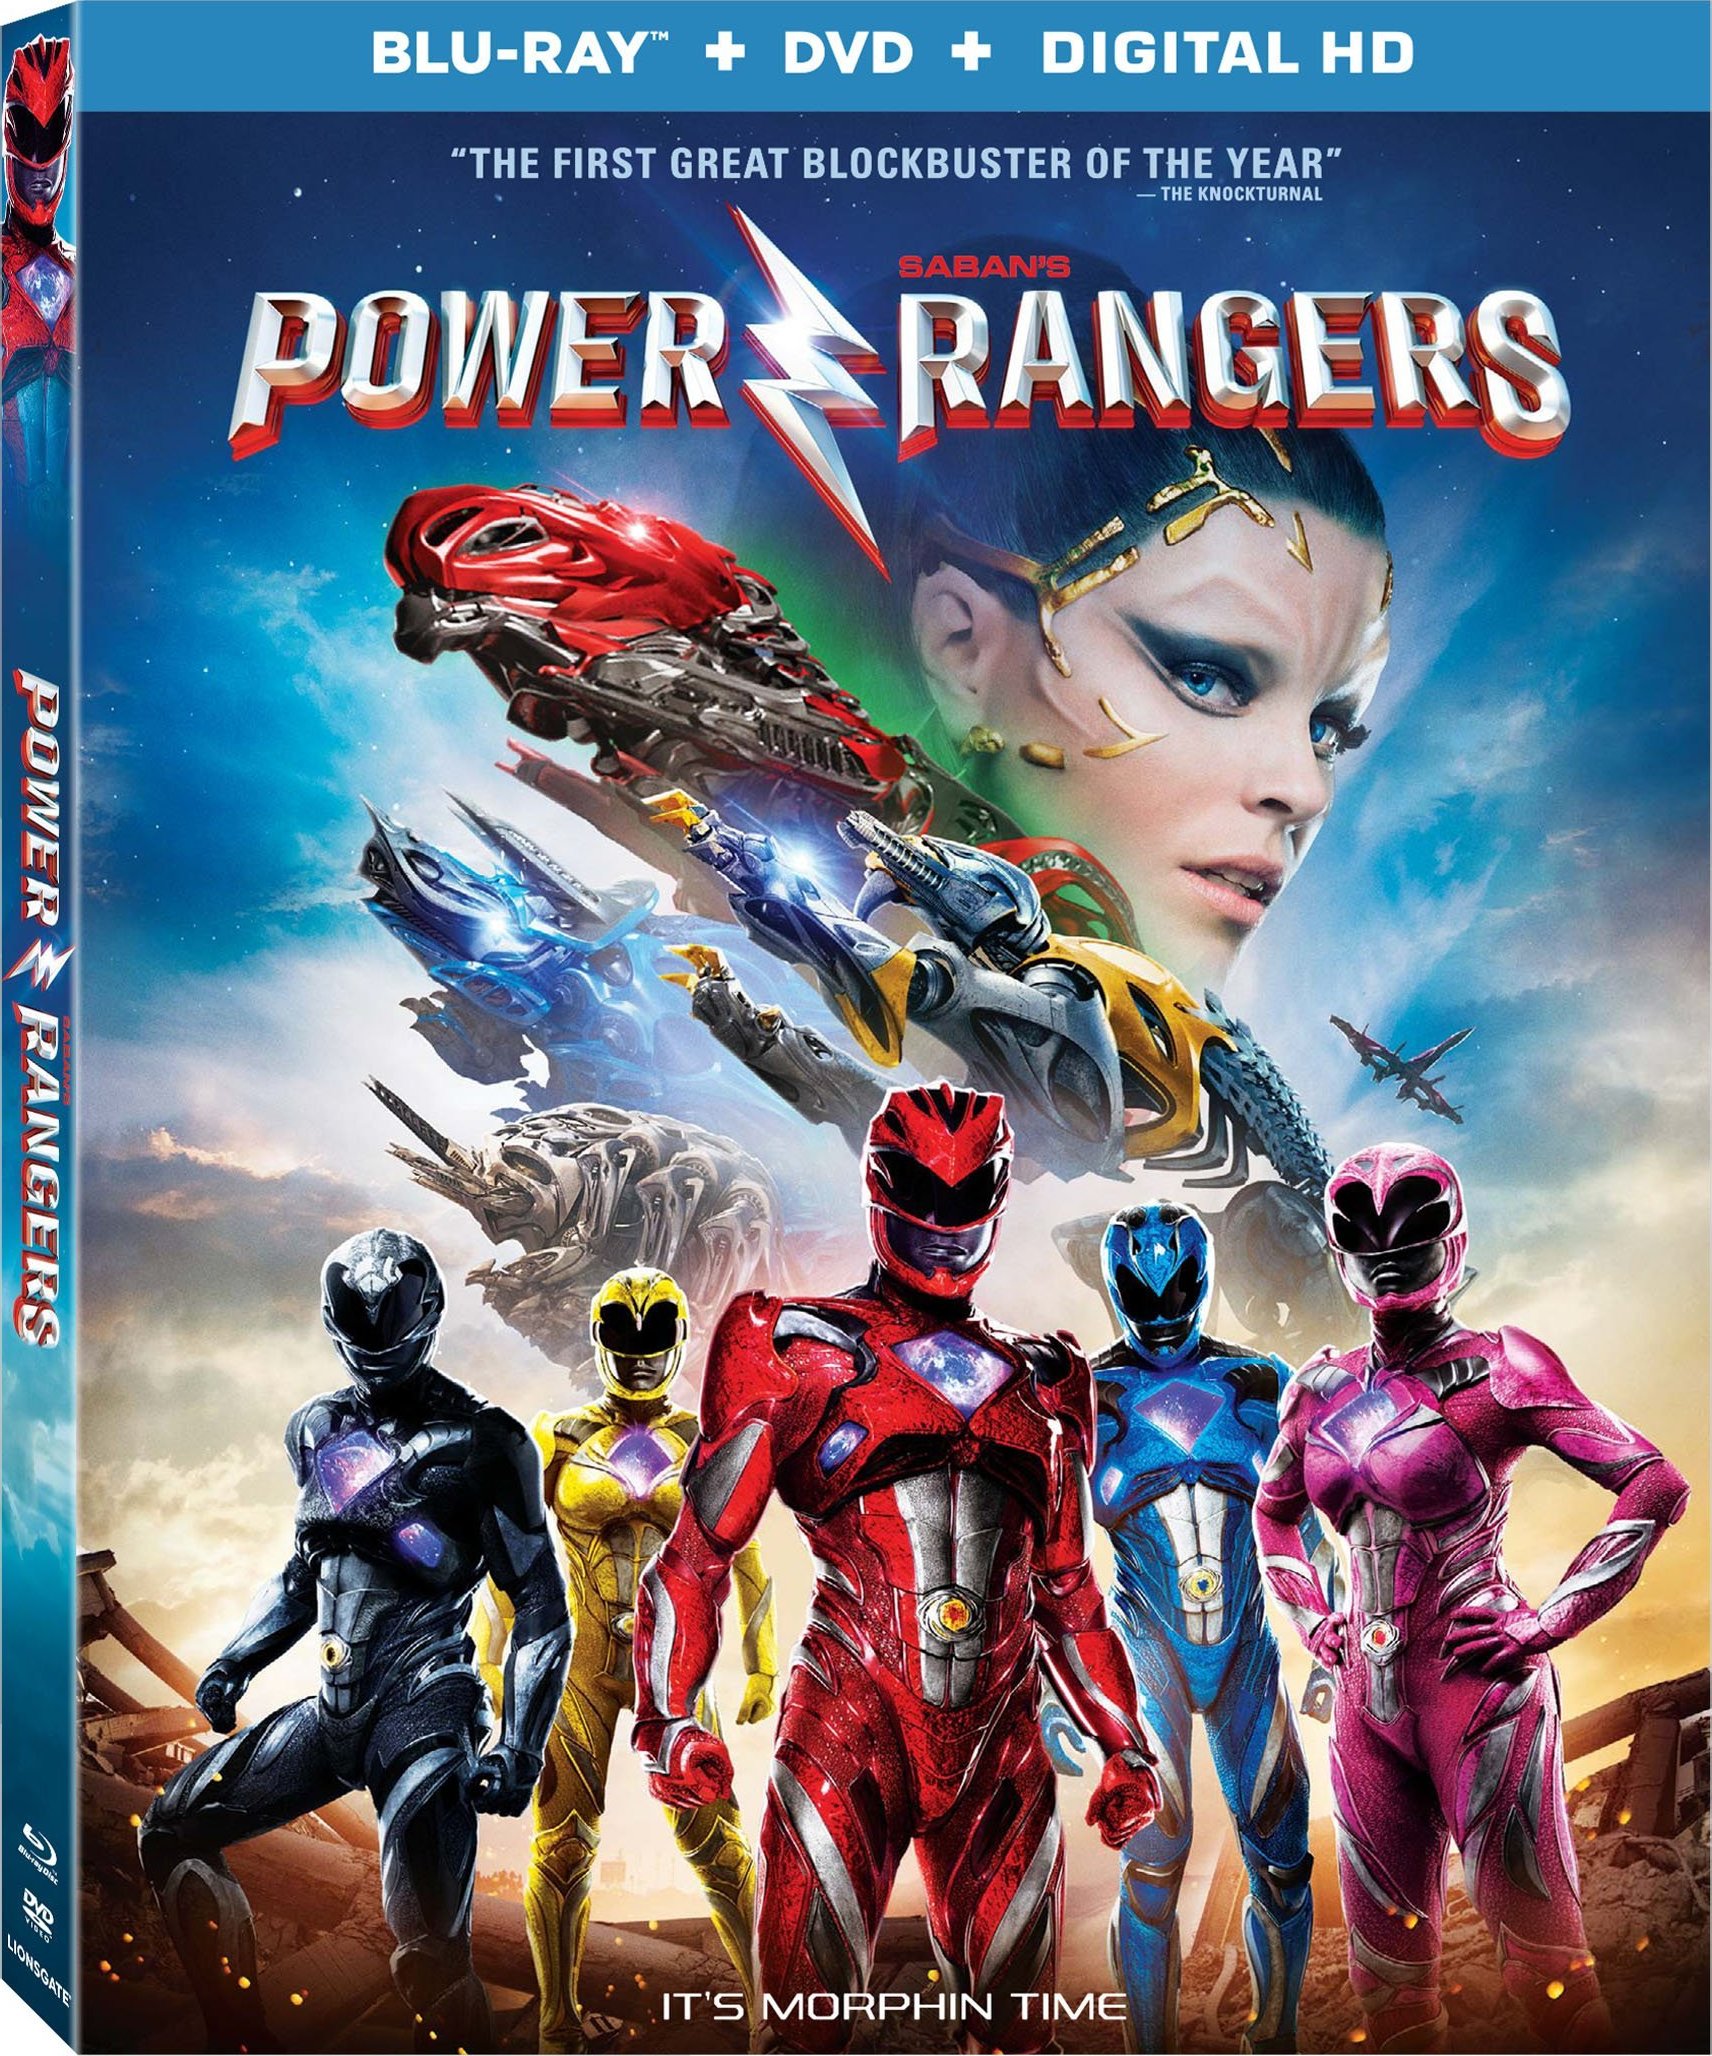 Power Rangers (2017) [DTS-HD MA 5.1 + SUP] [Blu Ray-Rip] [GOOGLEDRIVE*] 40291_front